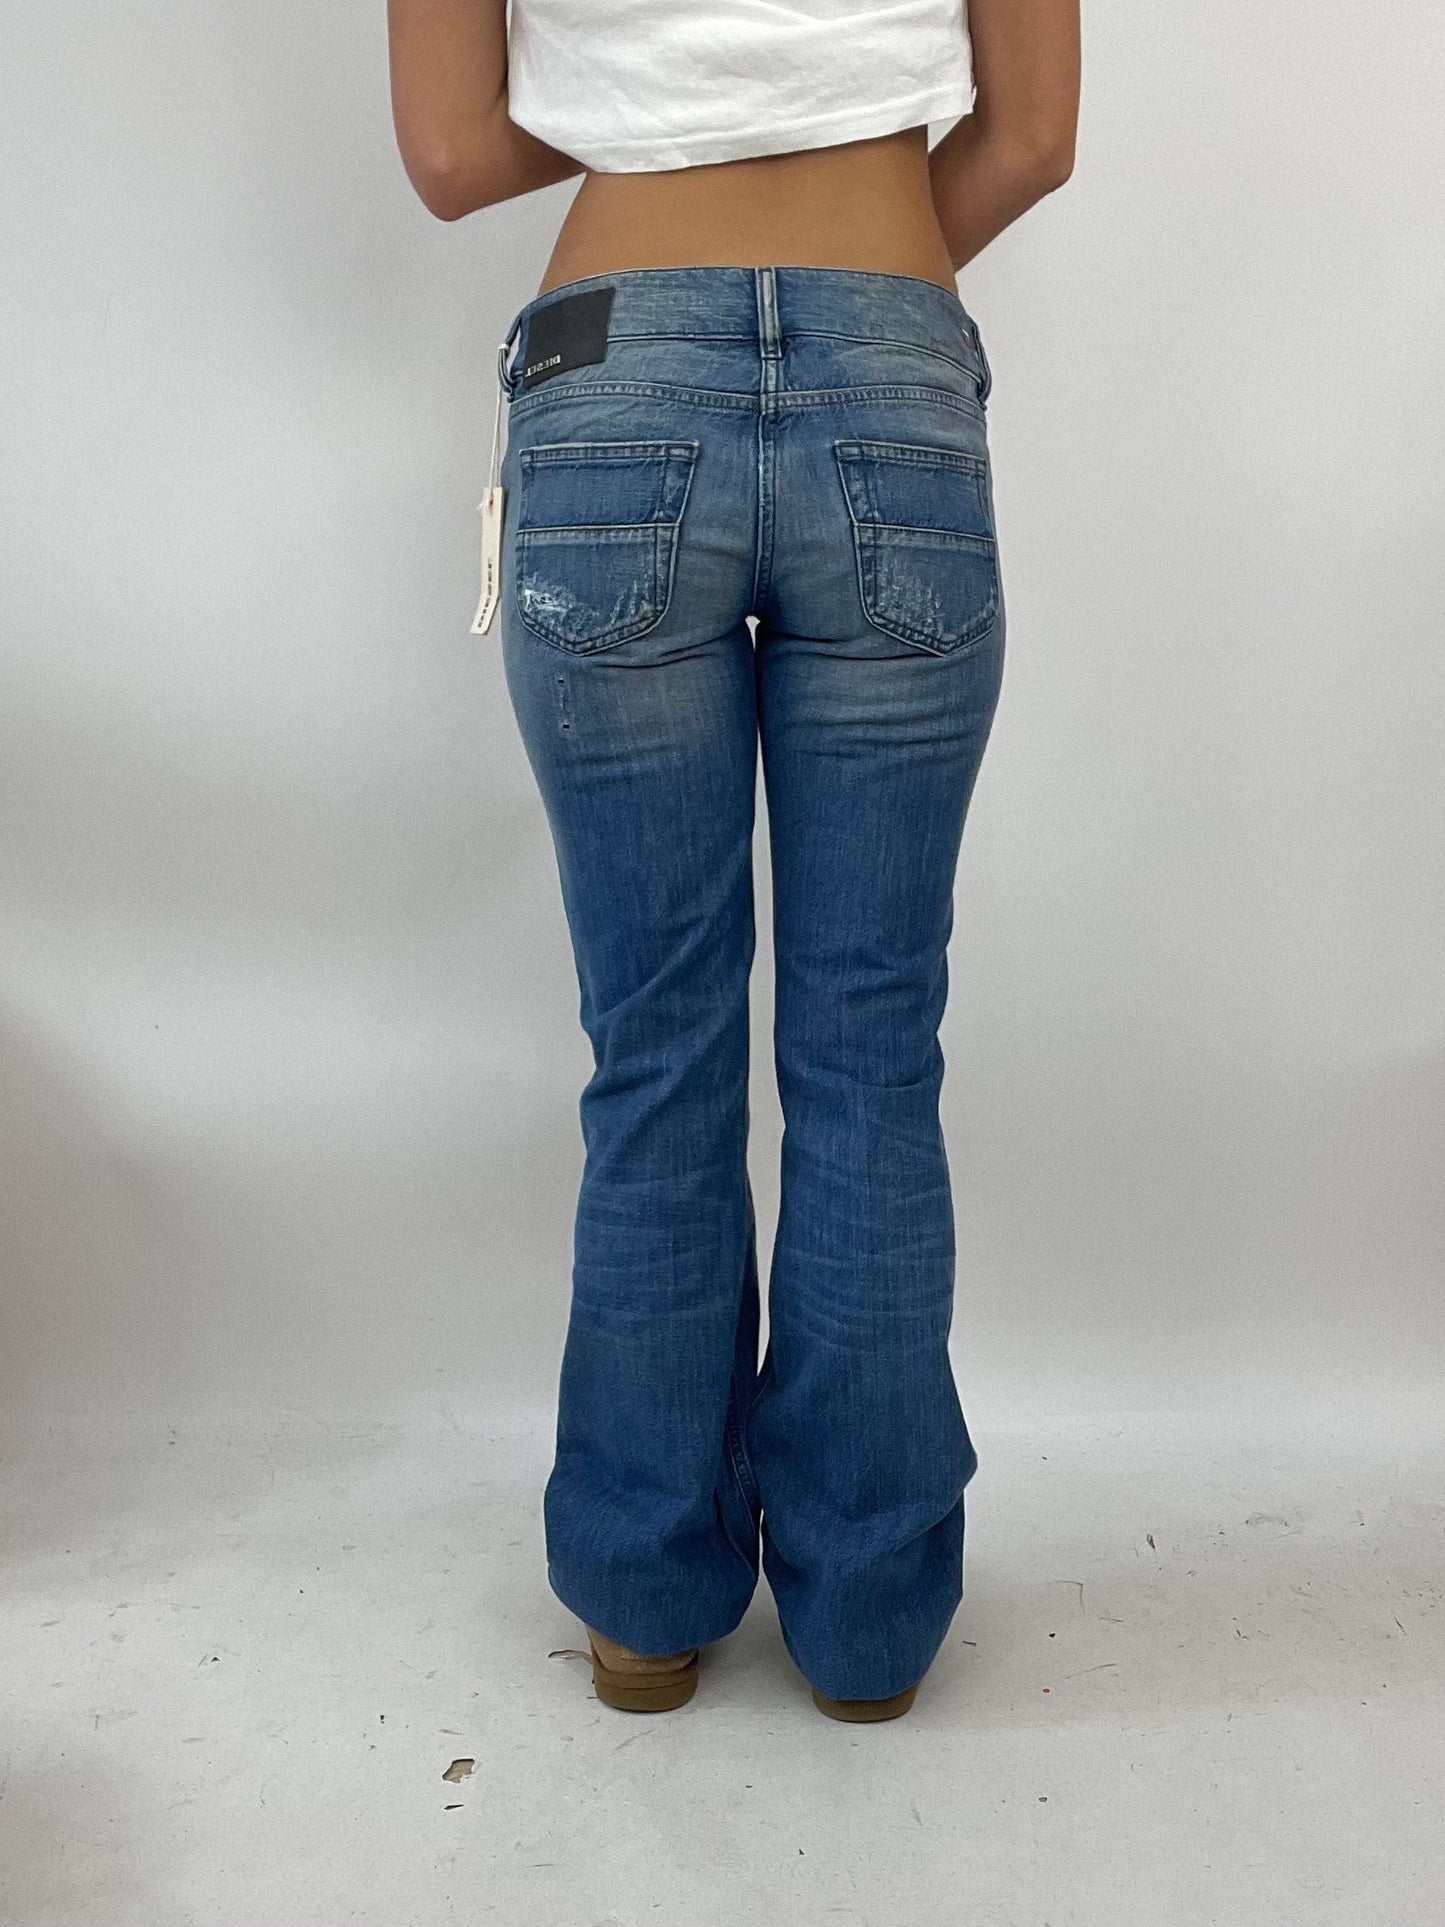 ADDISON RAE DROP | small denim diesel distressed jeans